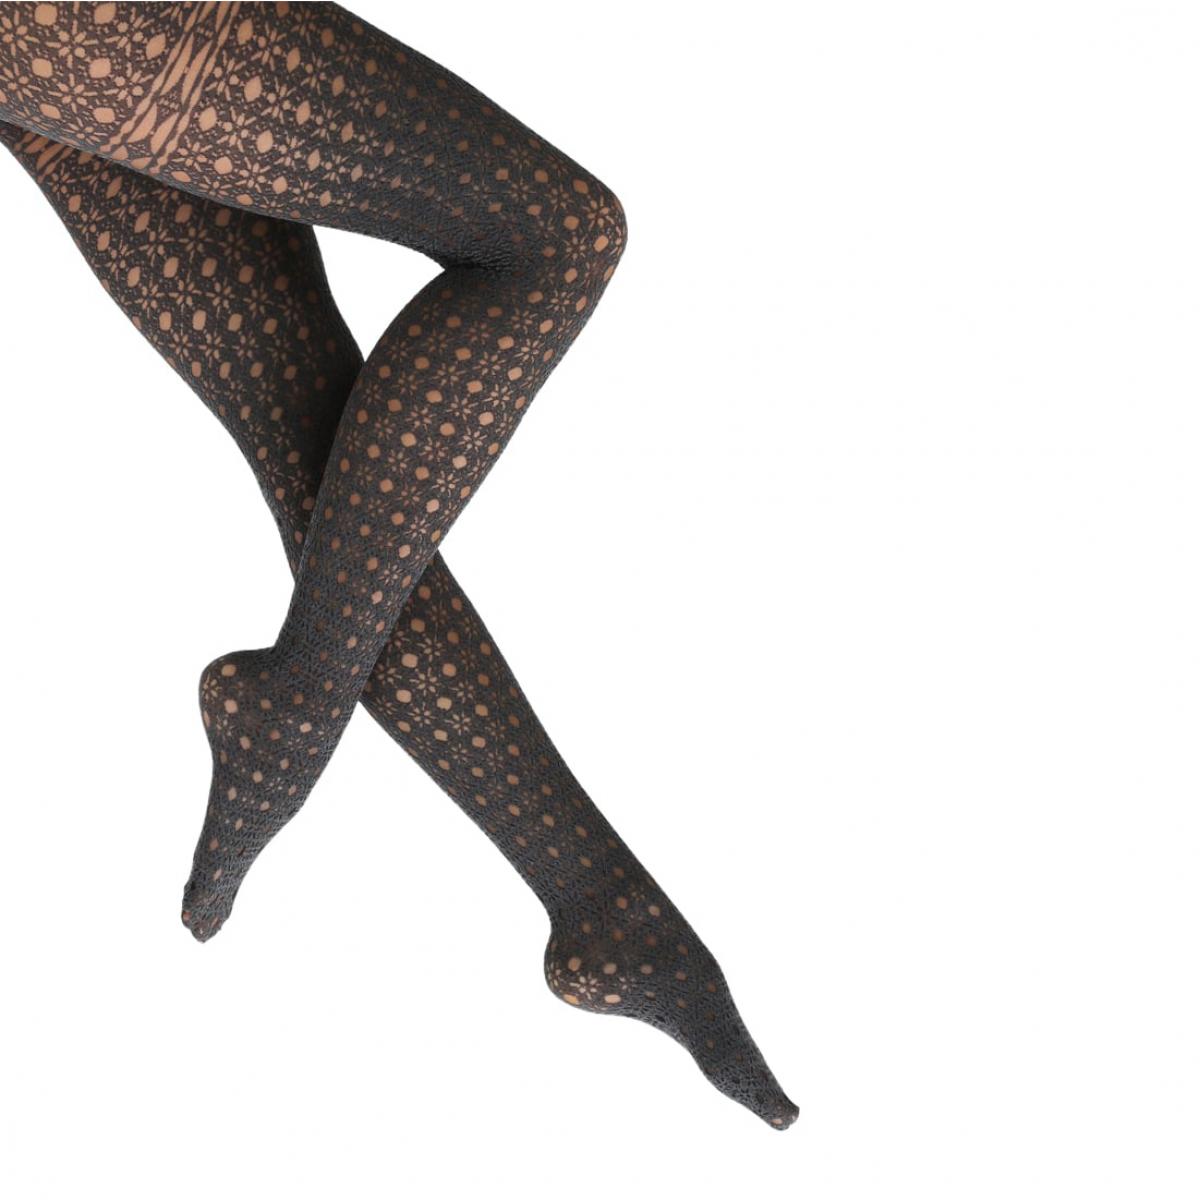 Raad jazz Rimpels TREND: 10 x stijlvolle panty's met patroon